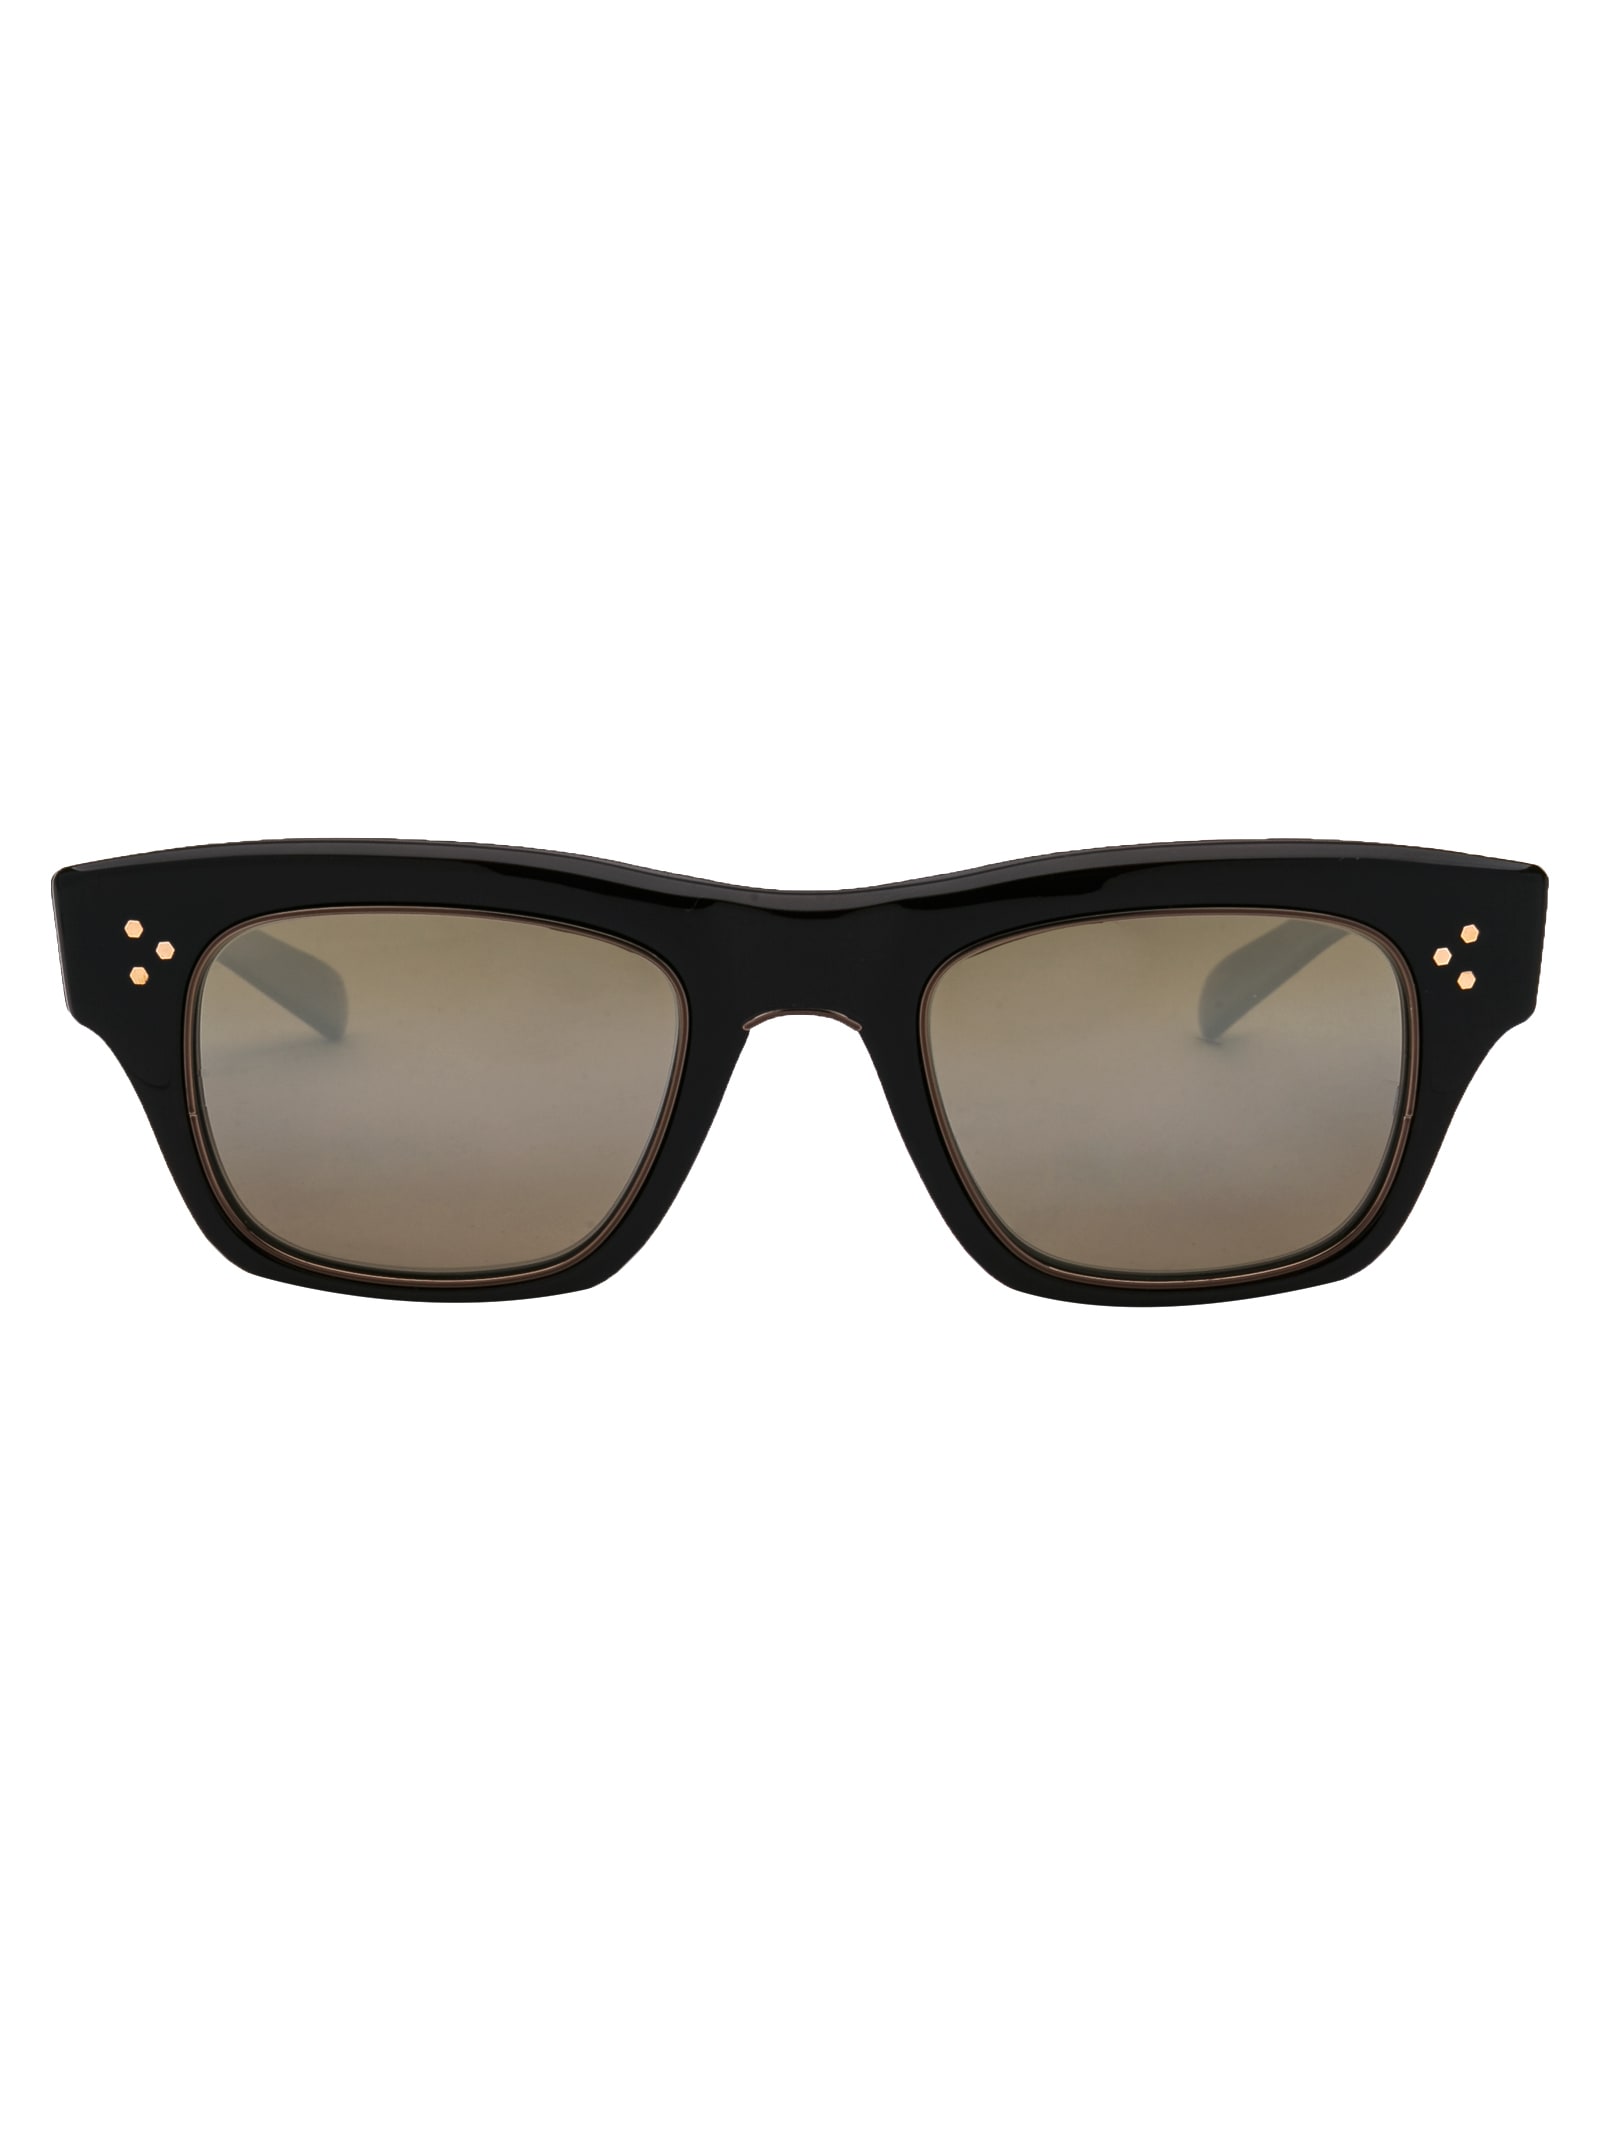 Garrett Leight Go S 48 Sunglasses In Cgnac-cg/smkyglssplr